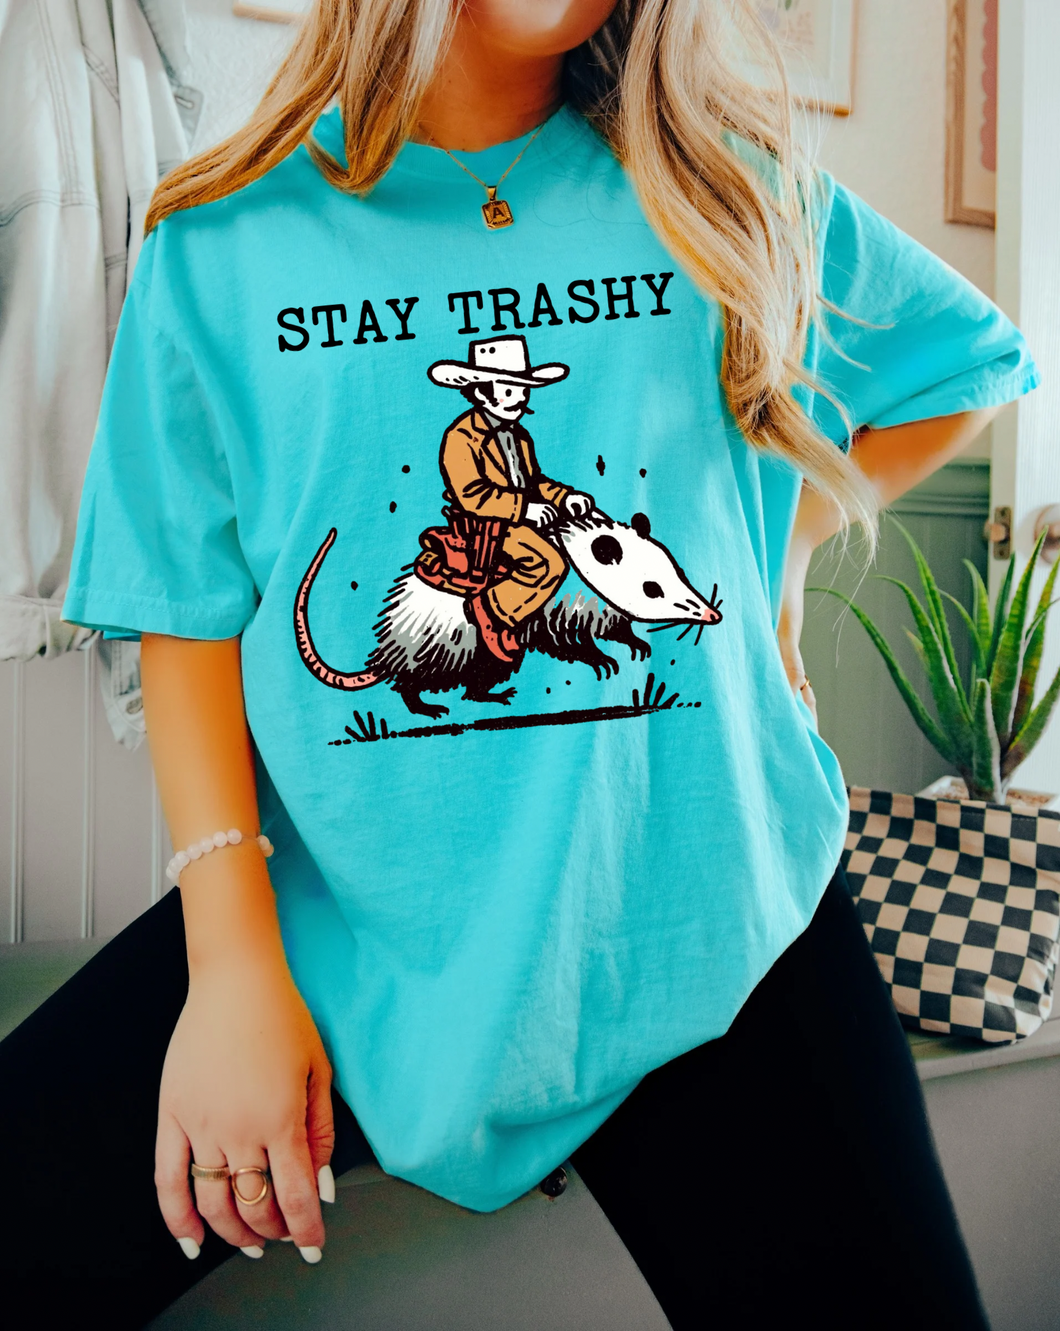 Stay Trashy Tee